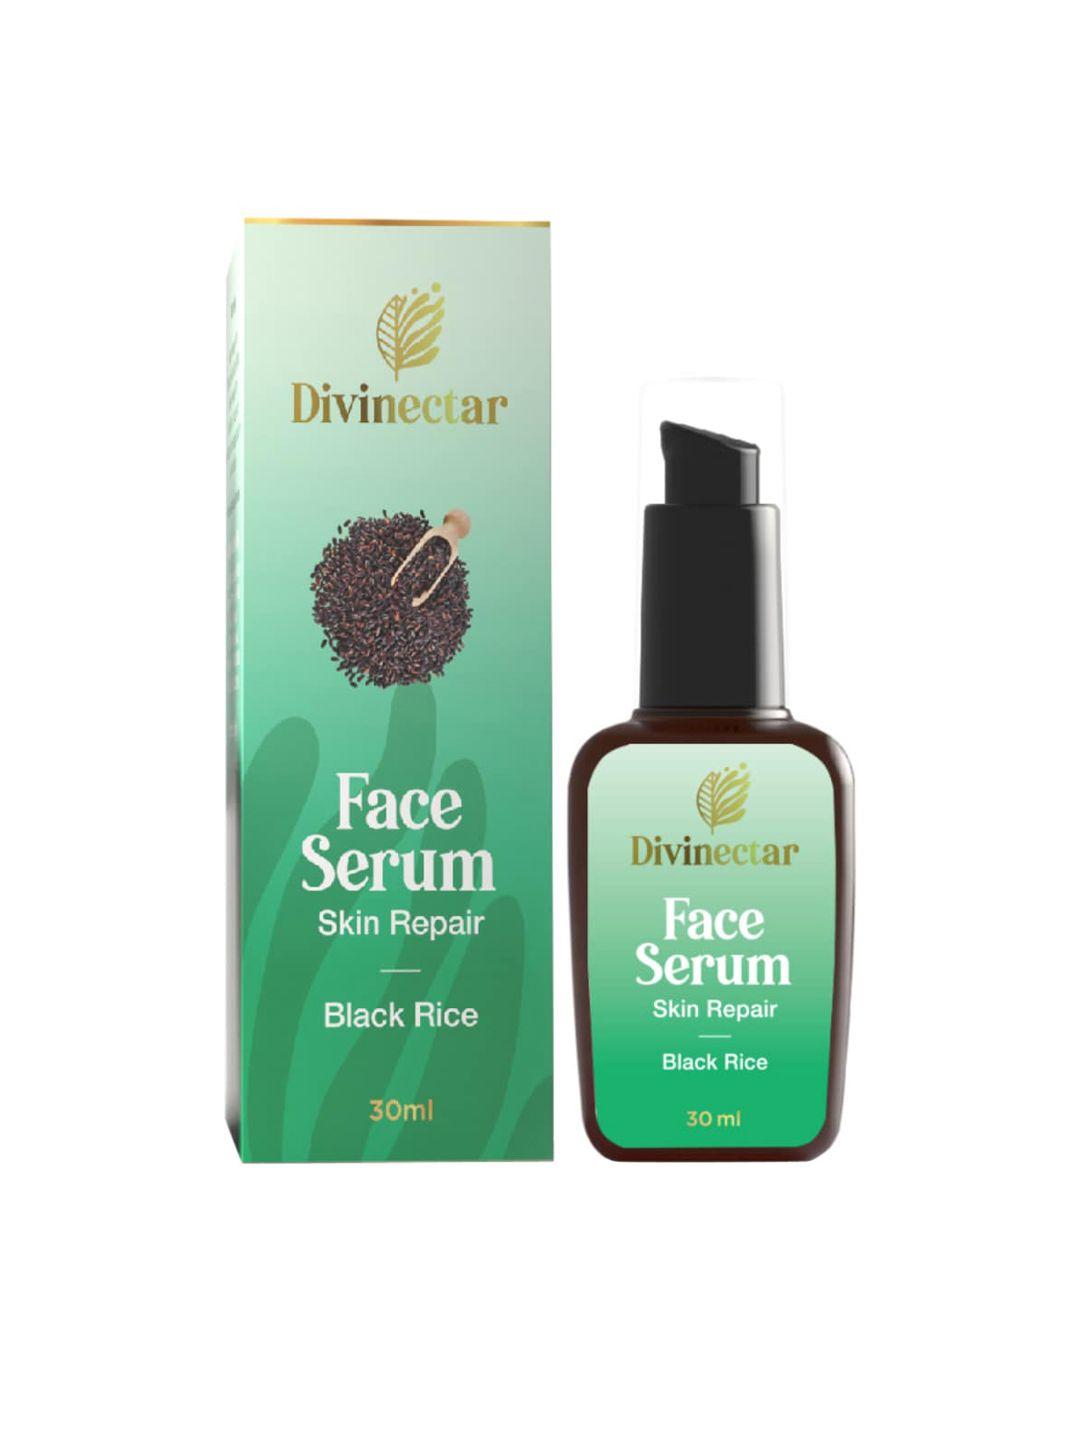 divinectar unisex face serum skin repair with black rice - 30ml